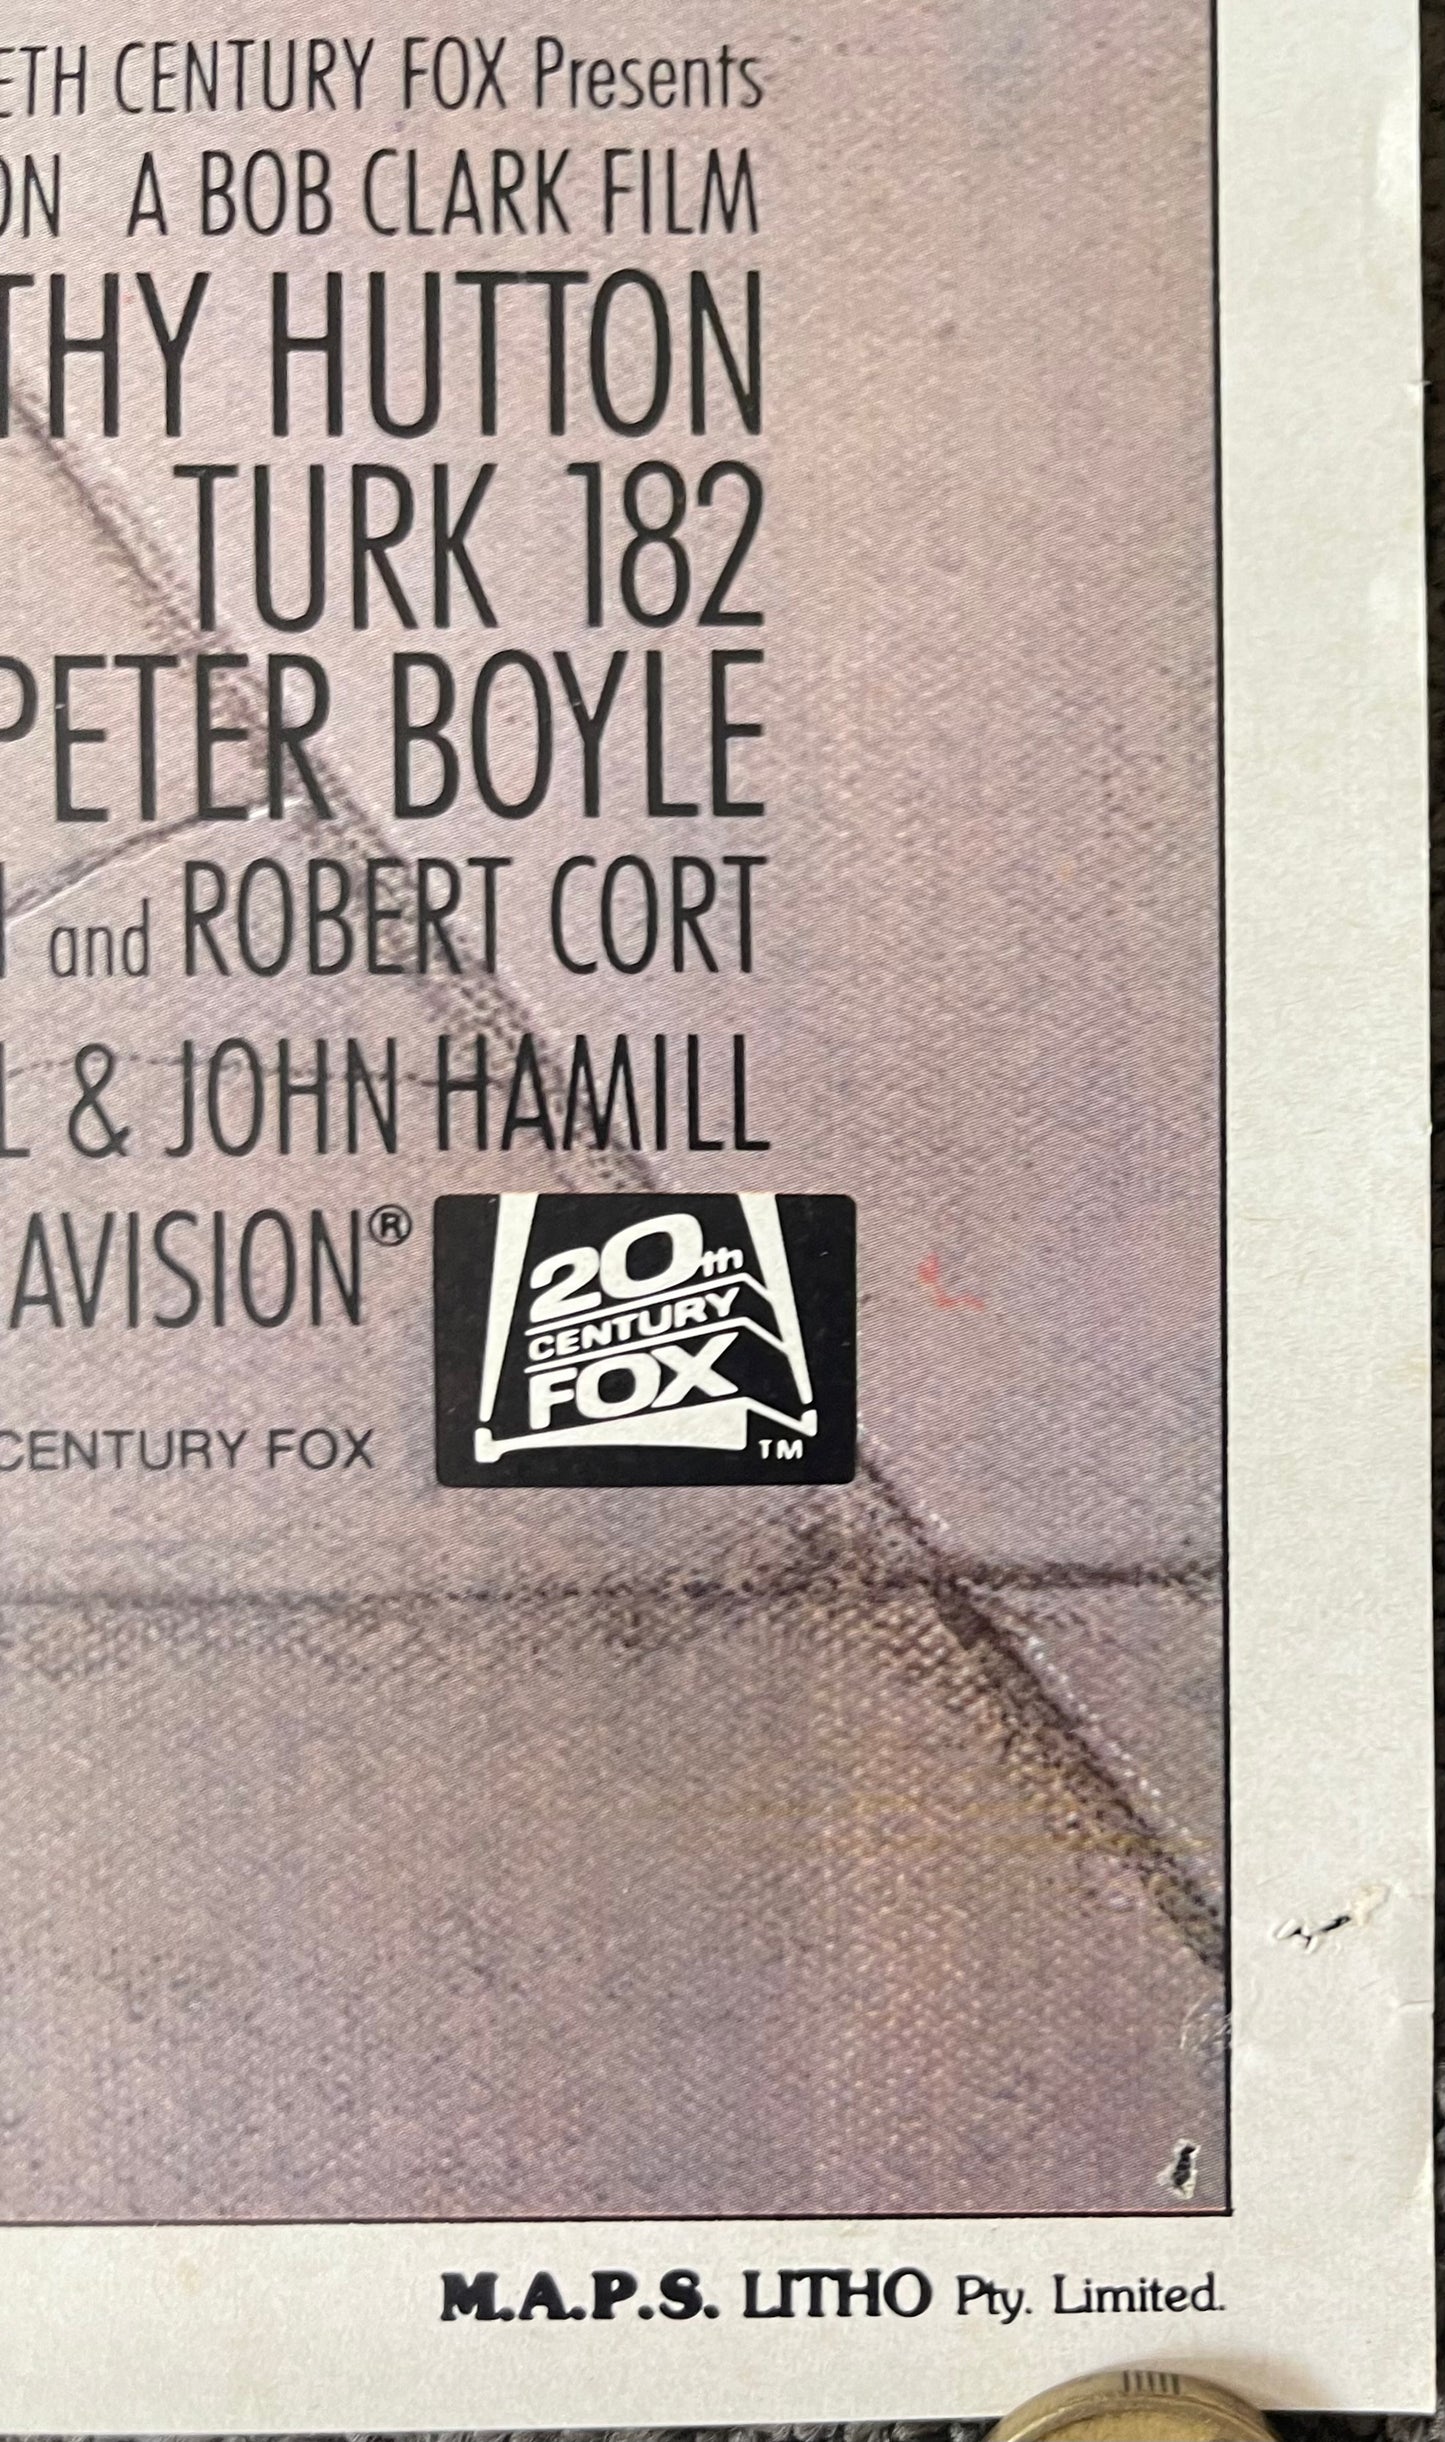 Turk 182 (1985) - Daybill